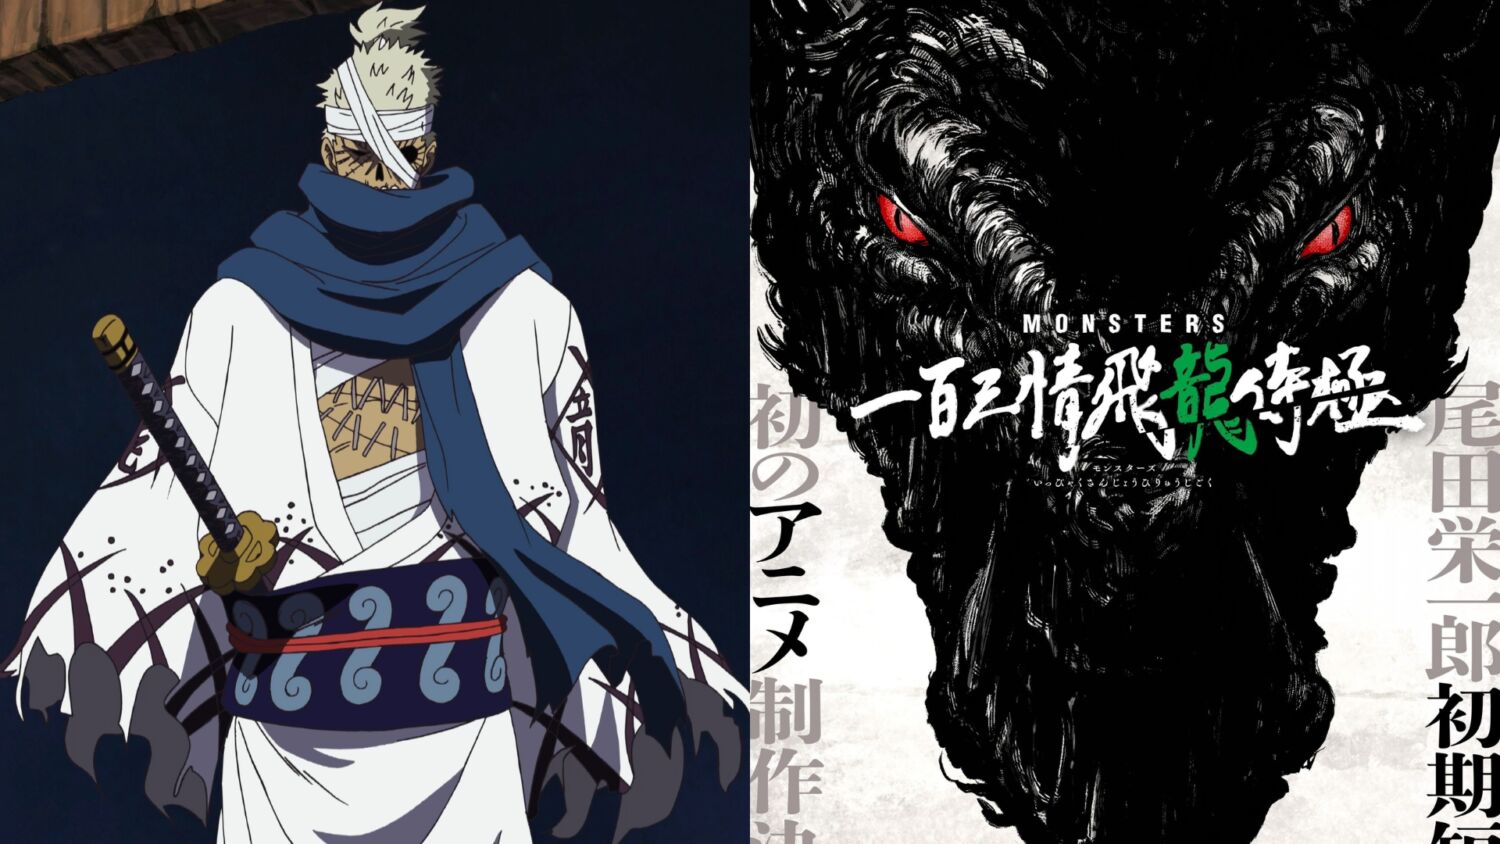 Eiichiro Oda's 'Monsters' 1-Shot Manga Gets Anime - News - Anime News  Network